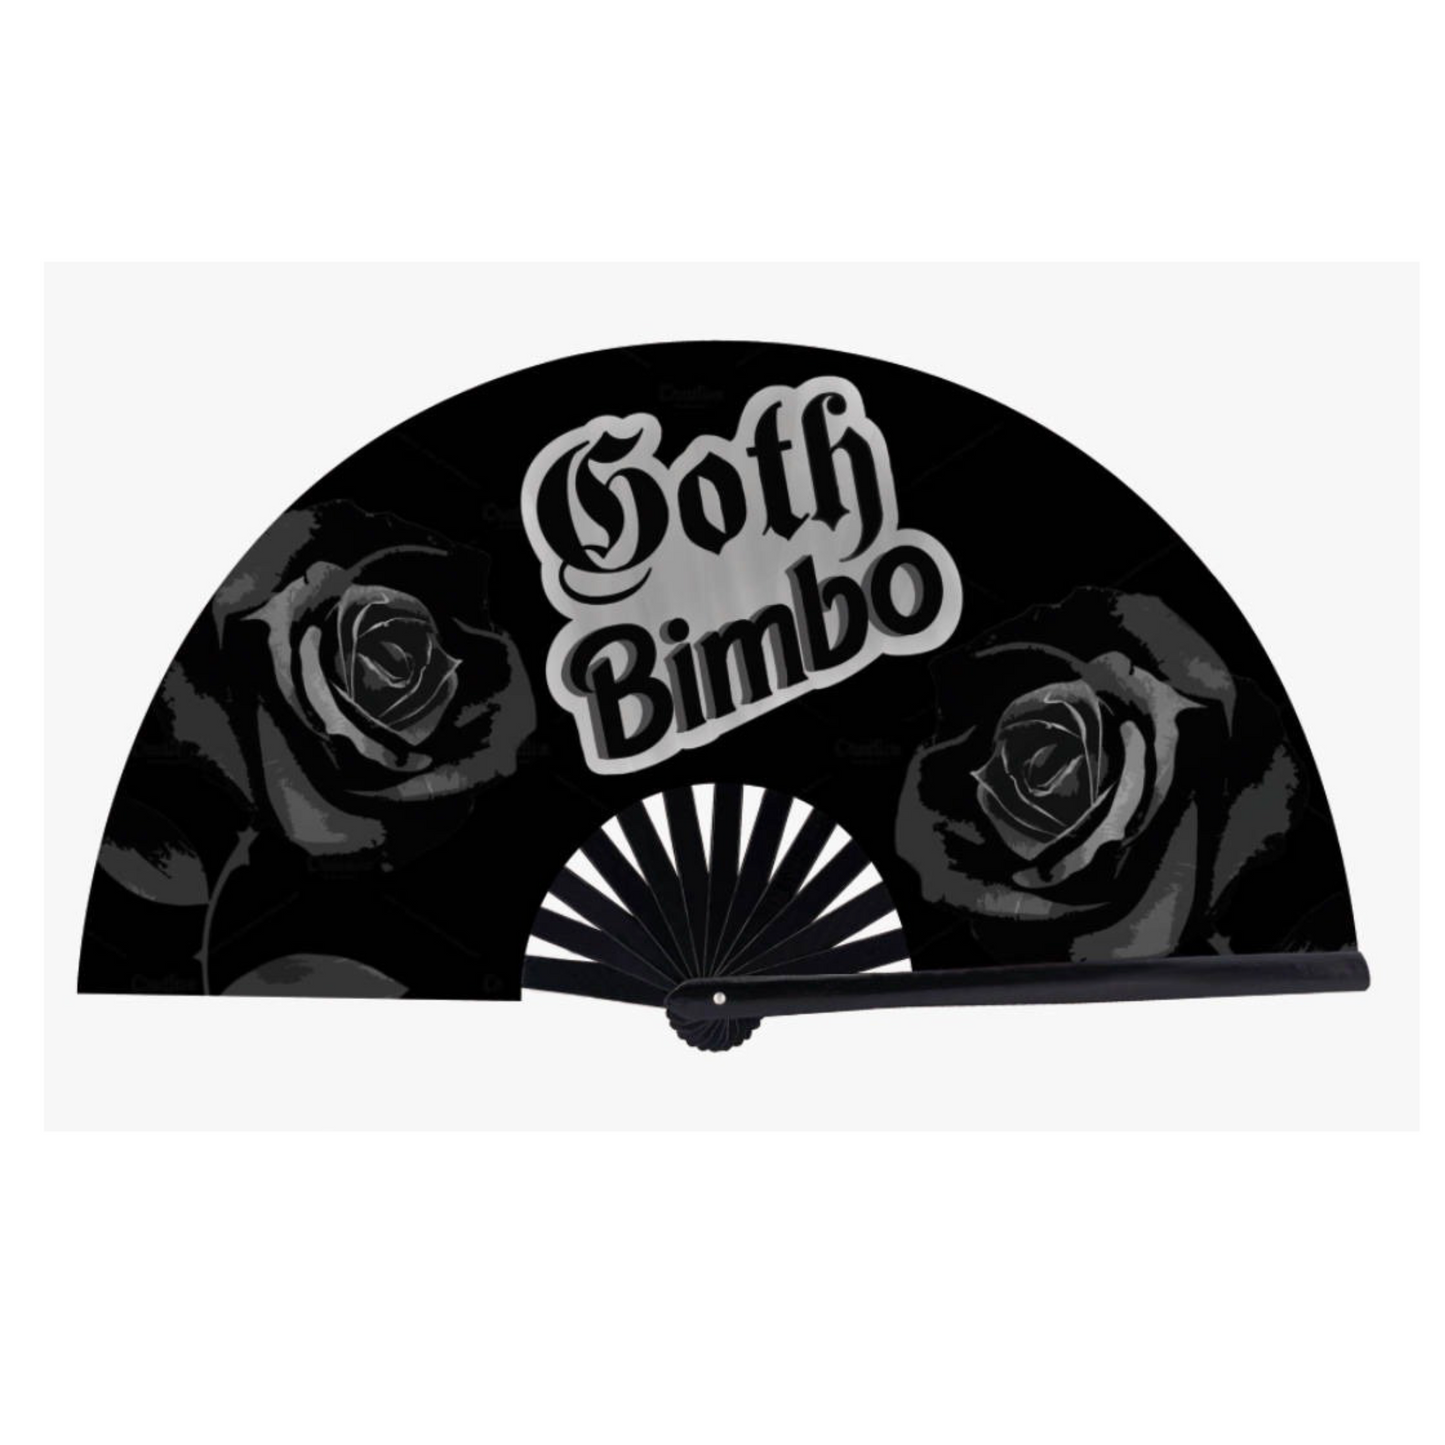 Goth Bimbo Clack Hand Fan